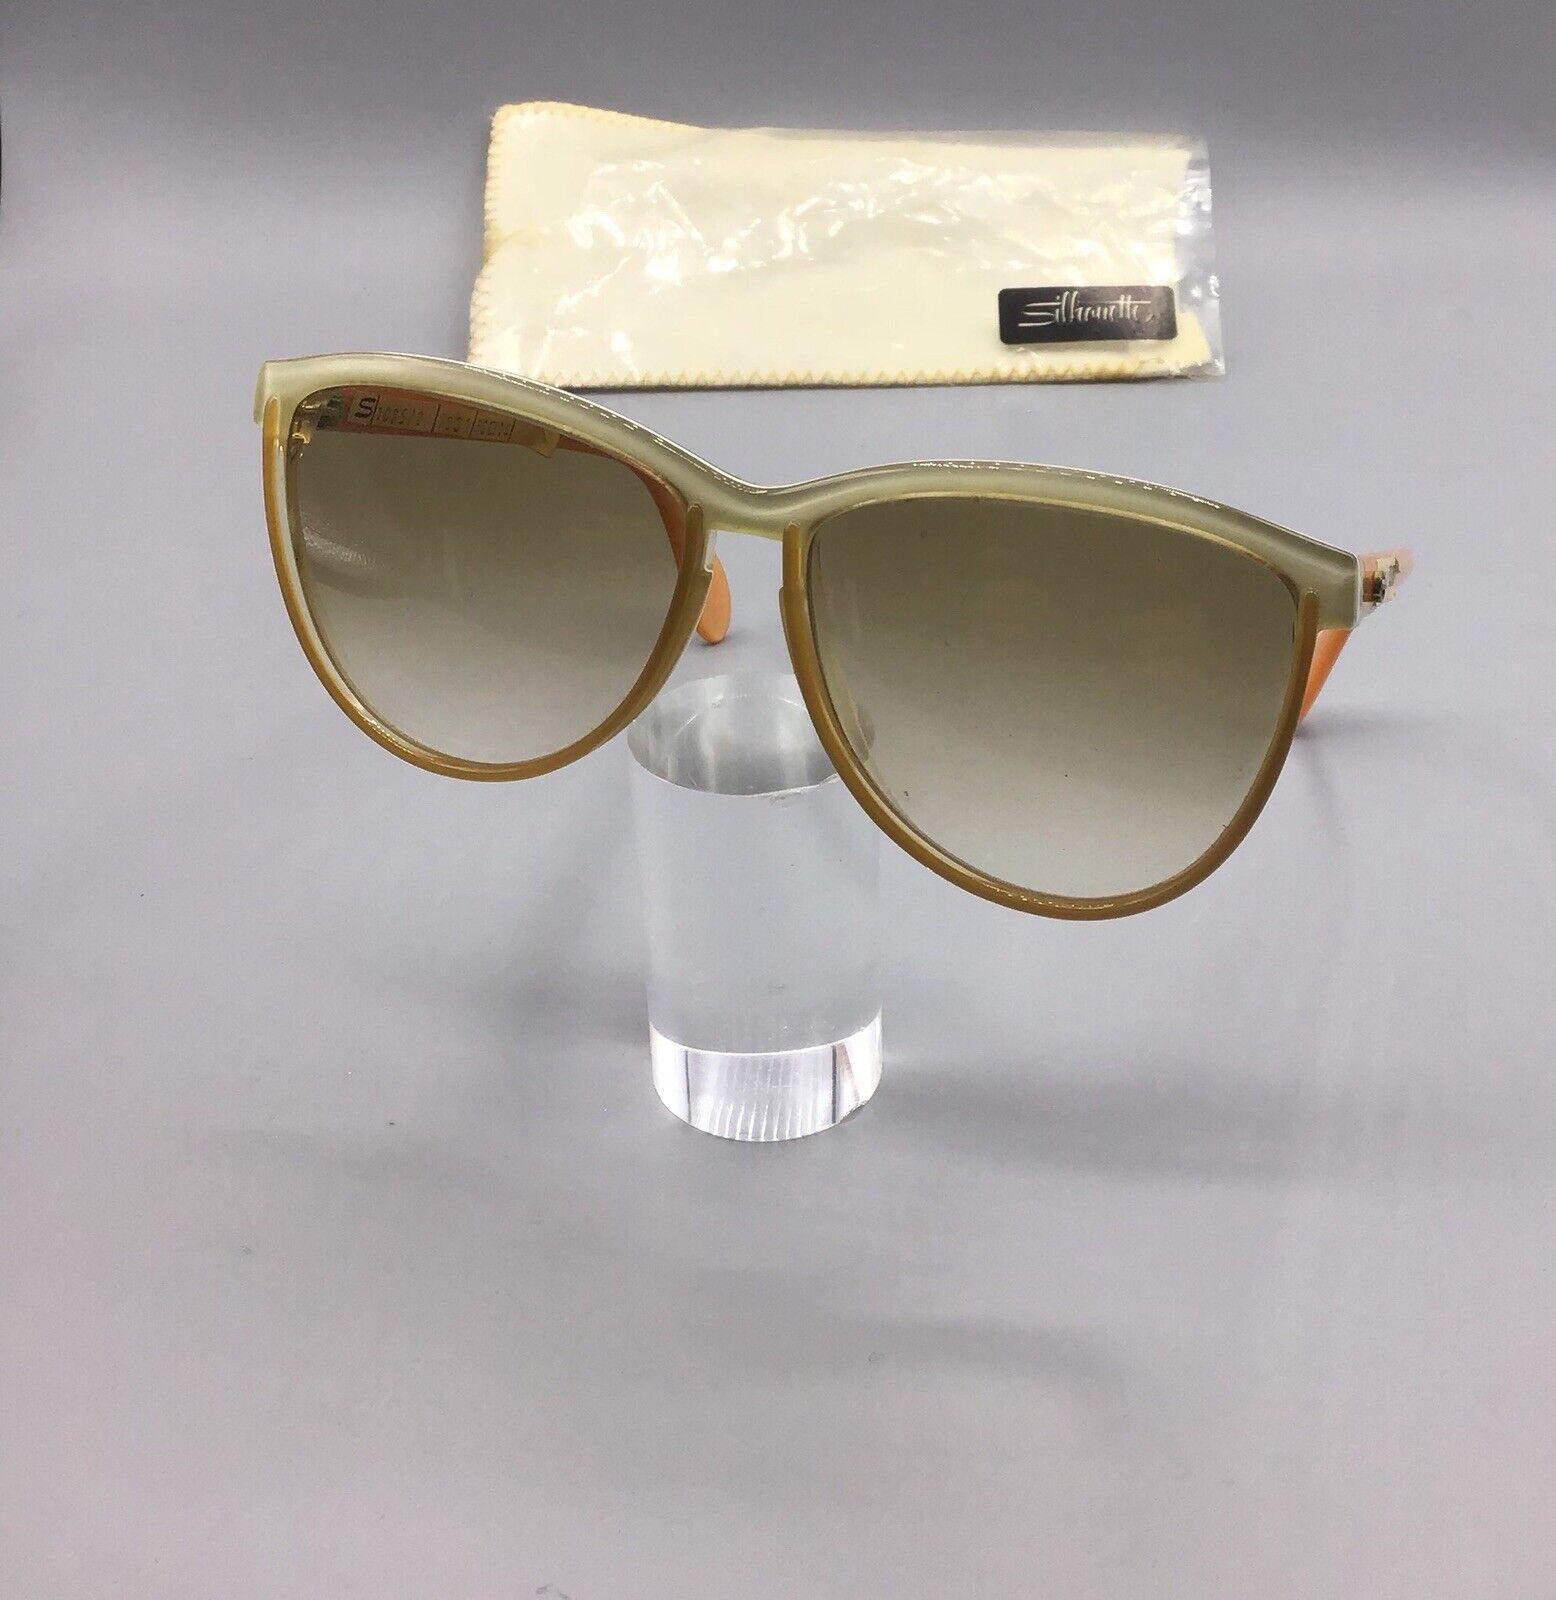 Silhouette 1085/2 2031 occhiale da sole vintage Sunglasses frame sonnenbrillen lunettes